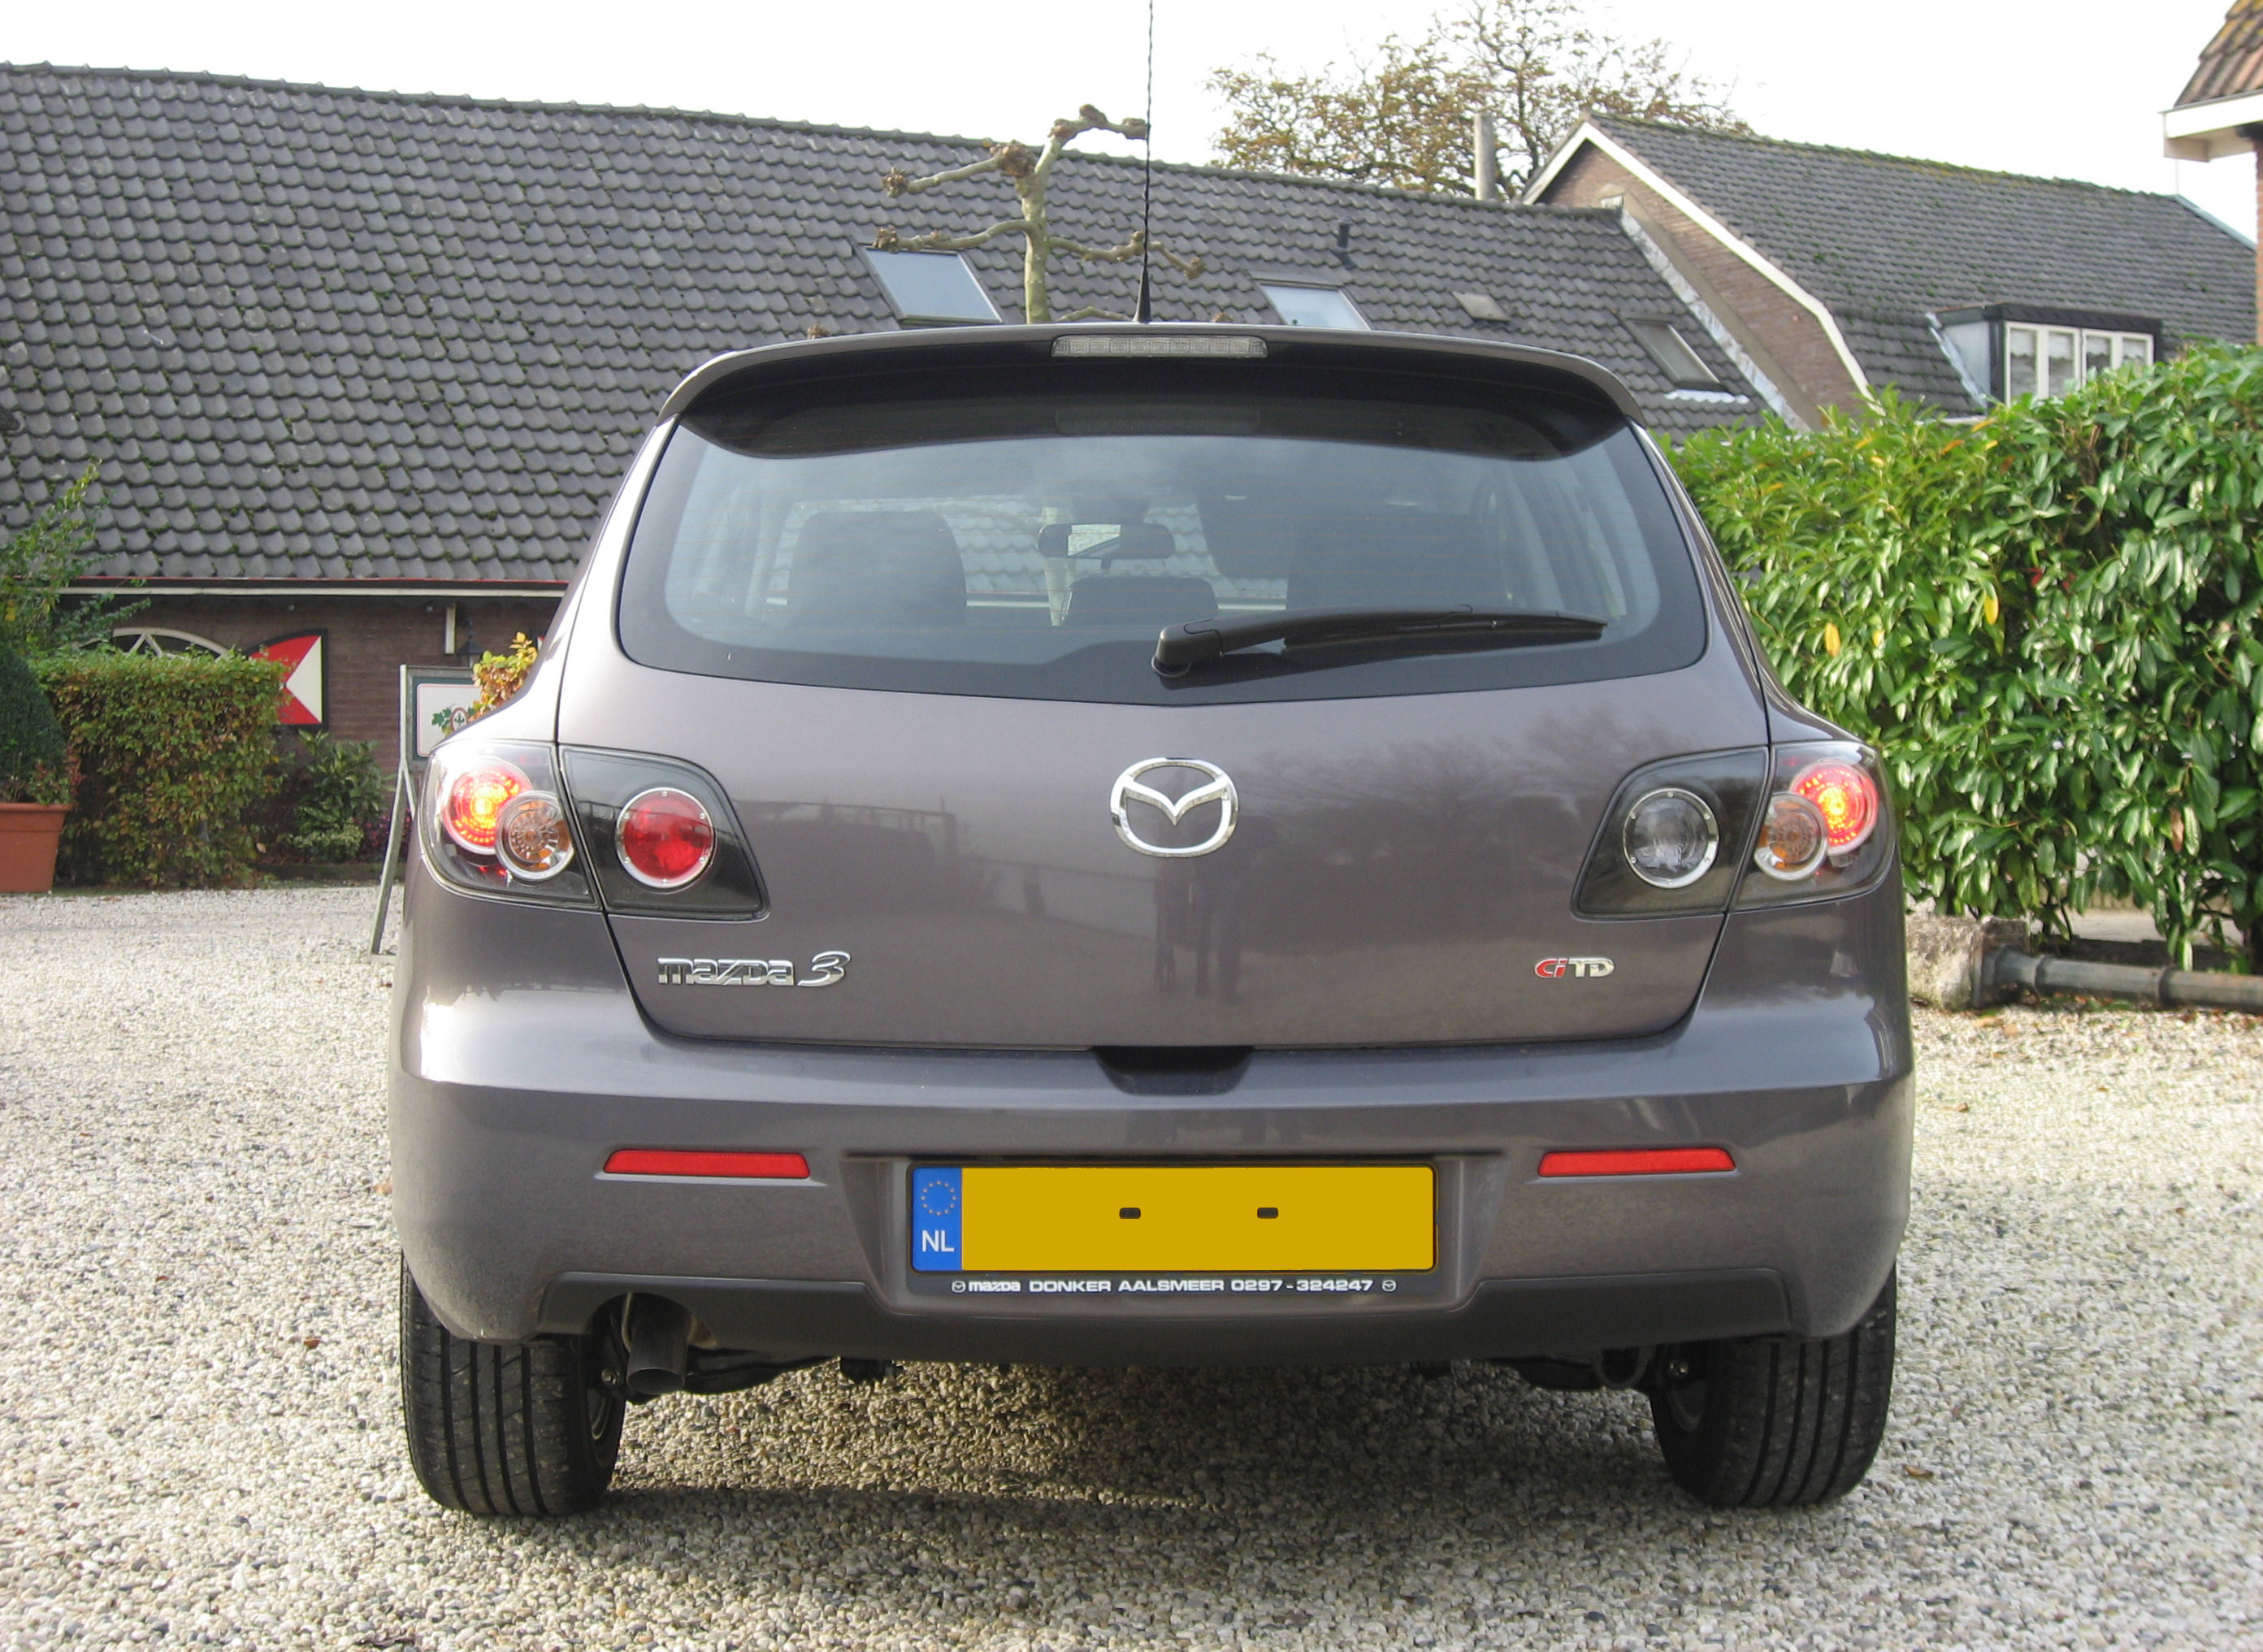 File:2007 mazda 3 hatchback rear.JPG - Wikimedia Commons